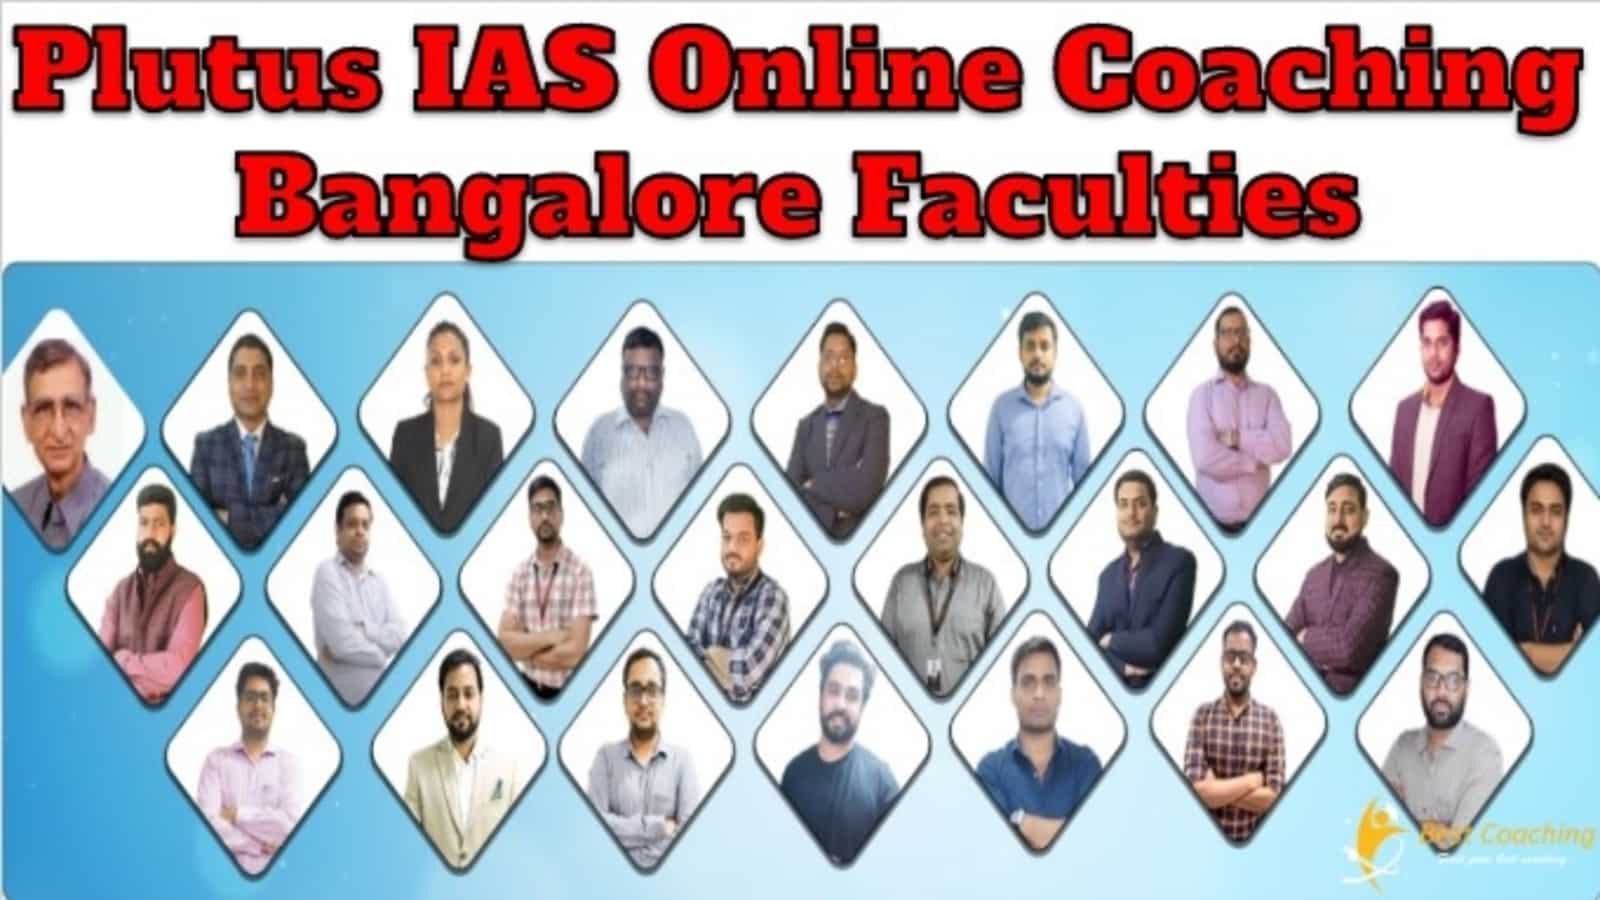 Plutus IAS Online Coaching Bangalore Faculties